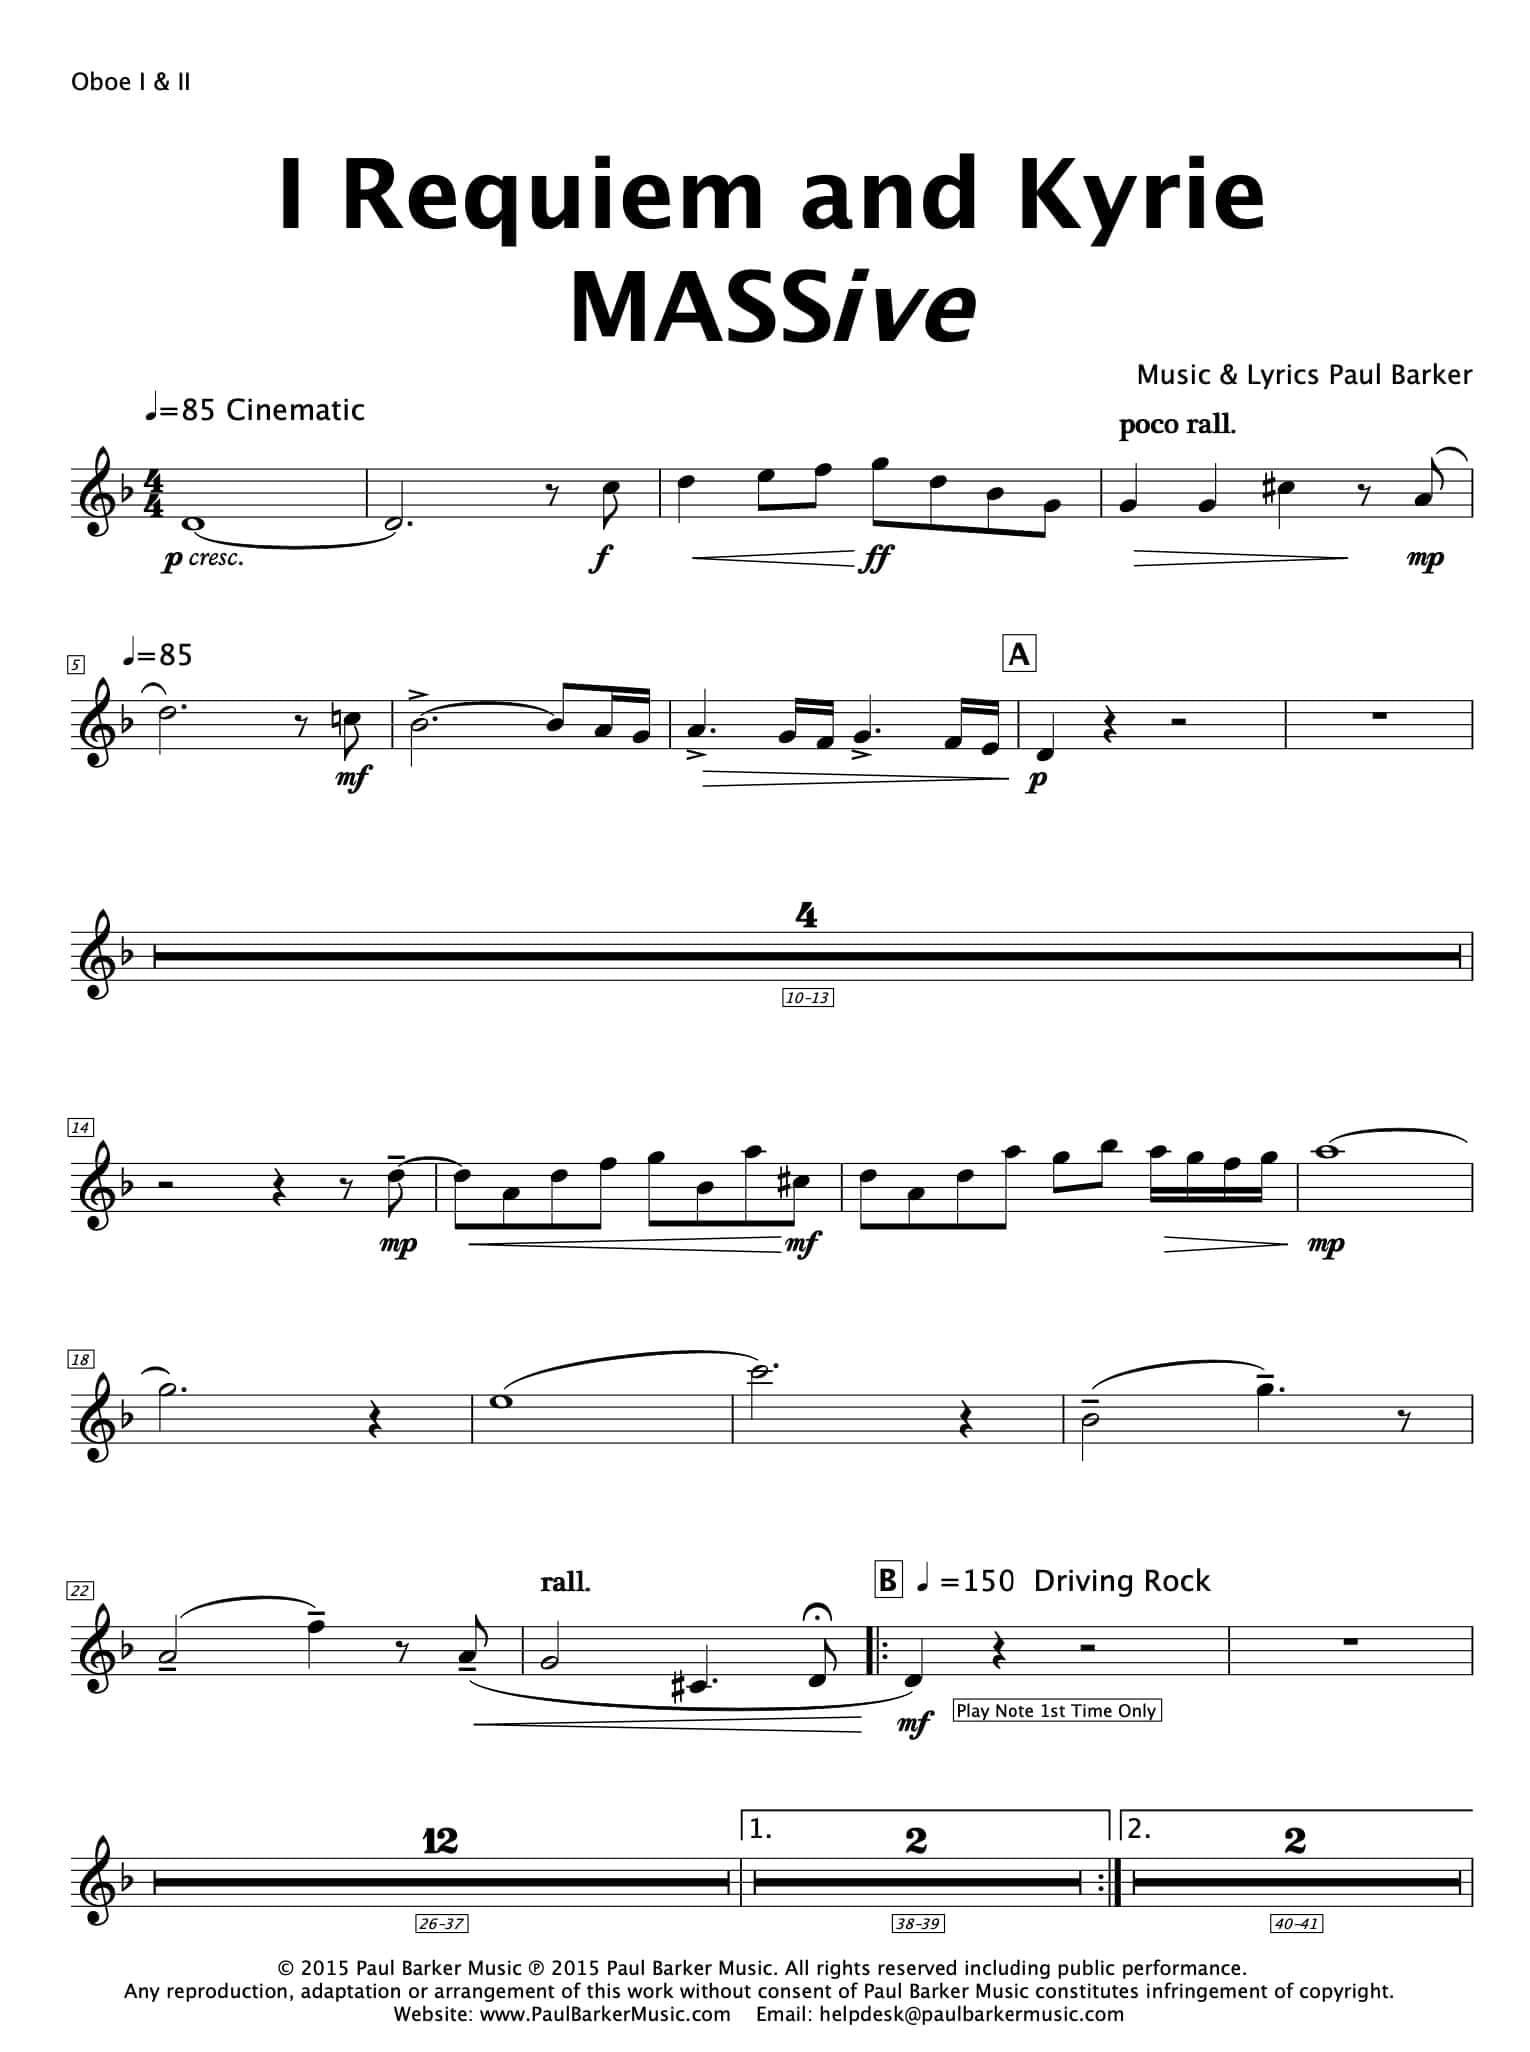 MASSive - A Mass In Rock! - Paul Barker Music 